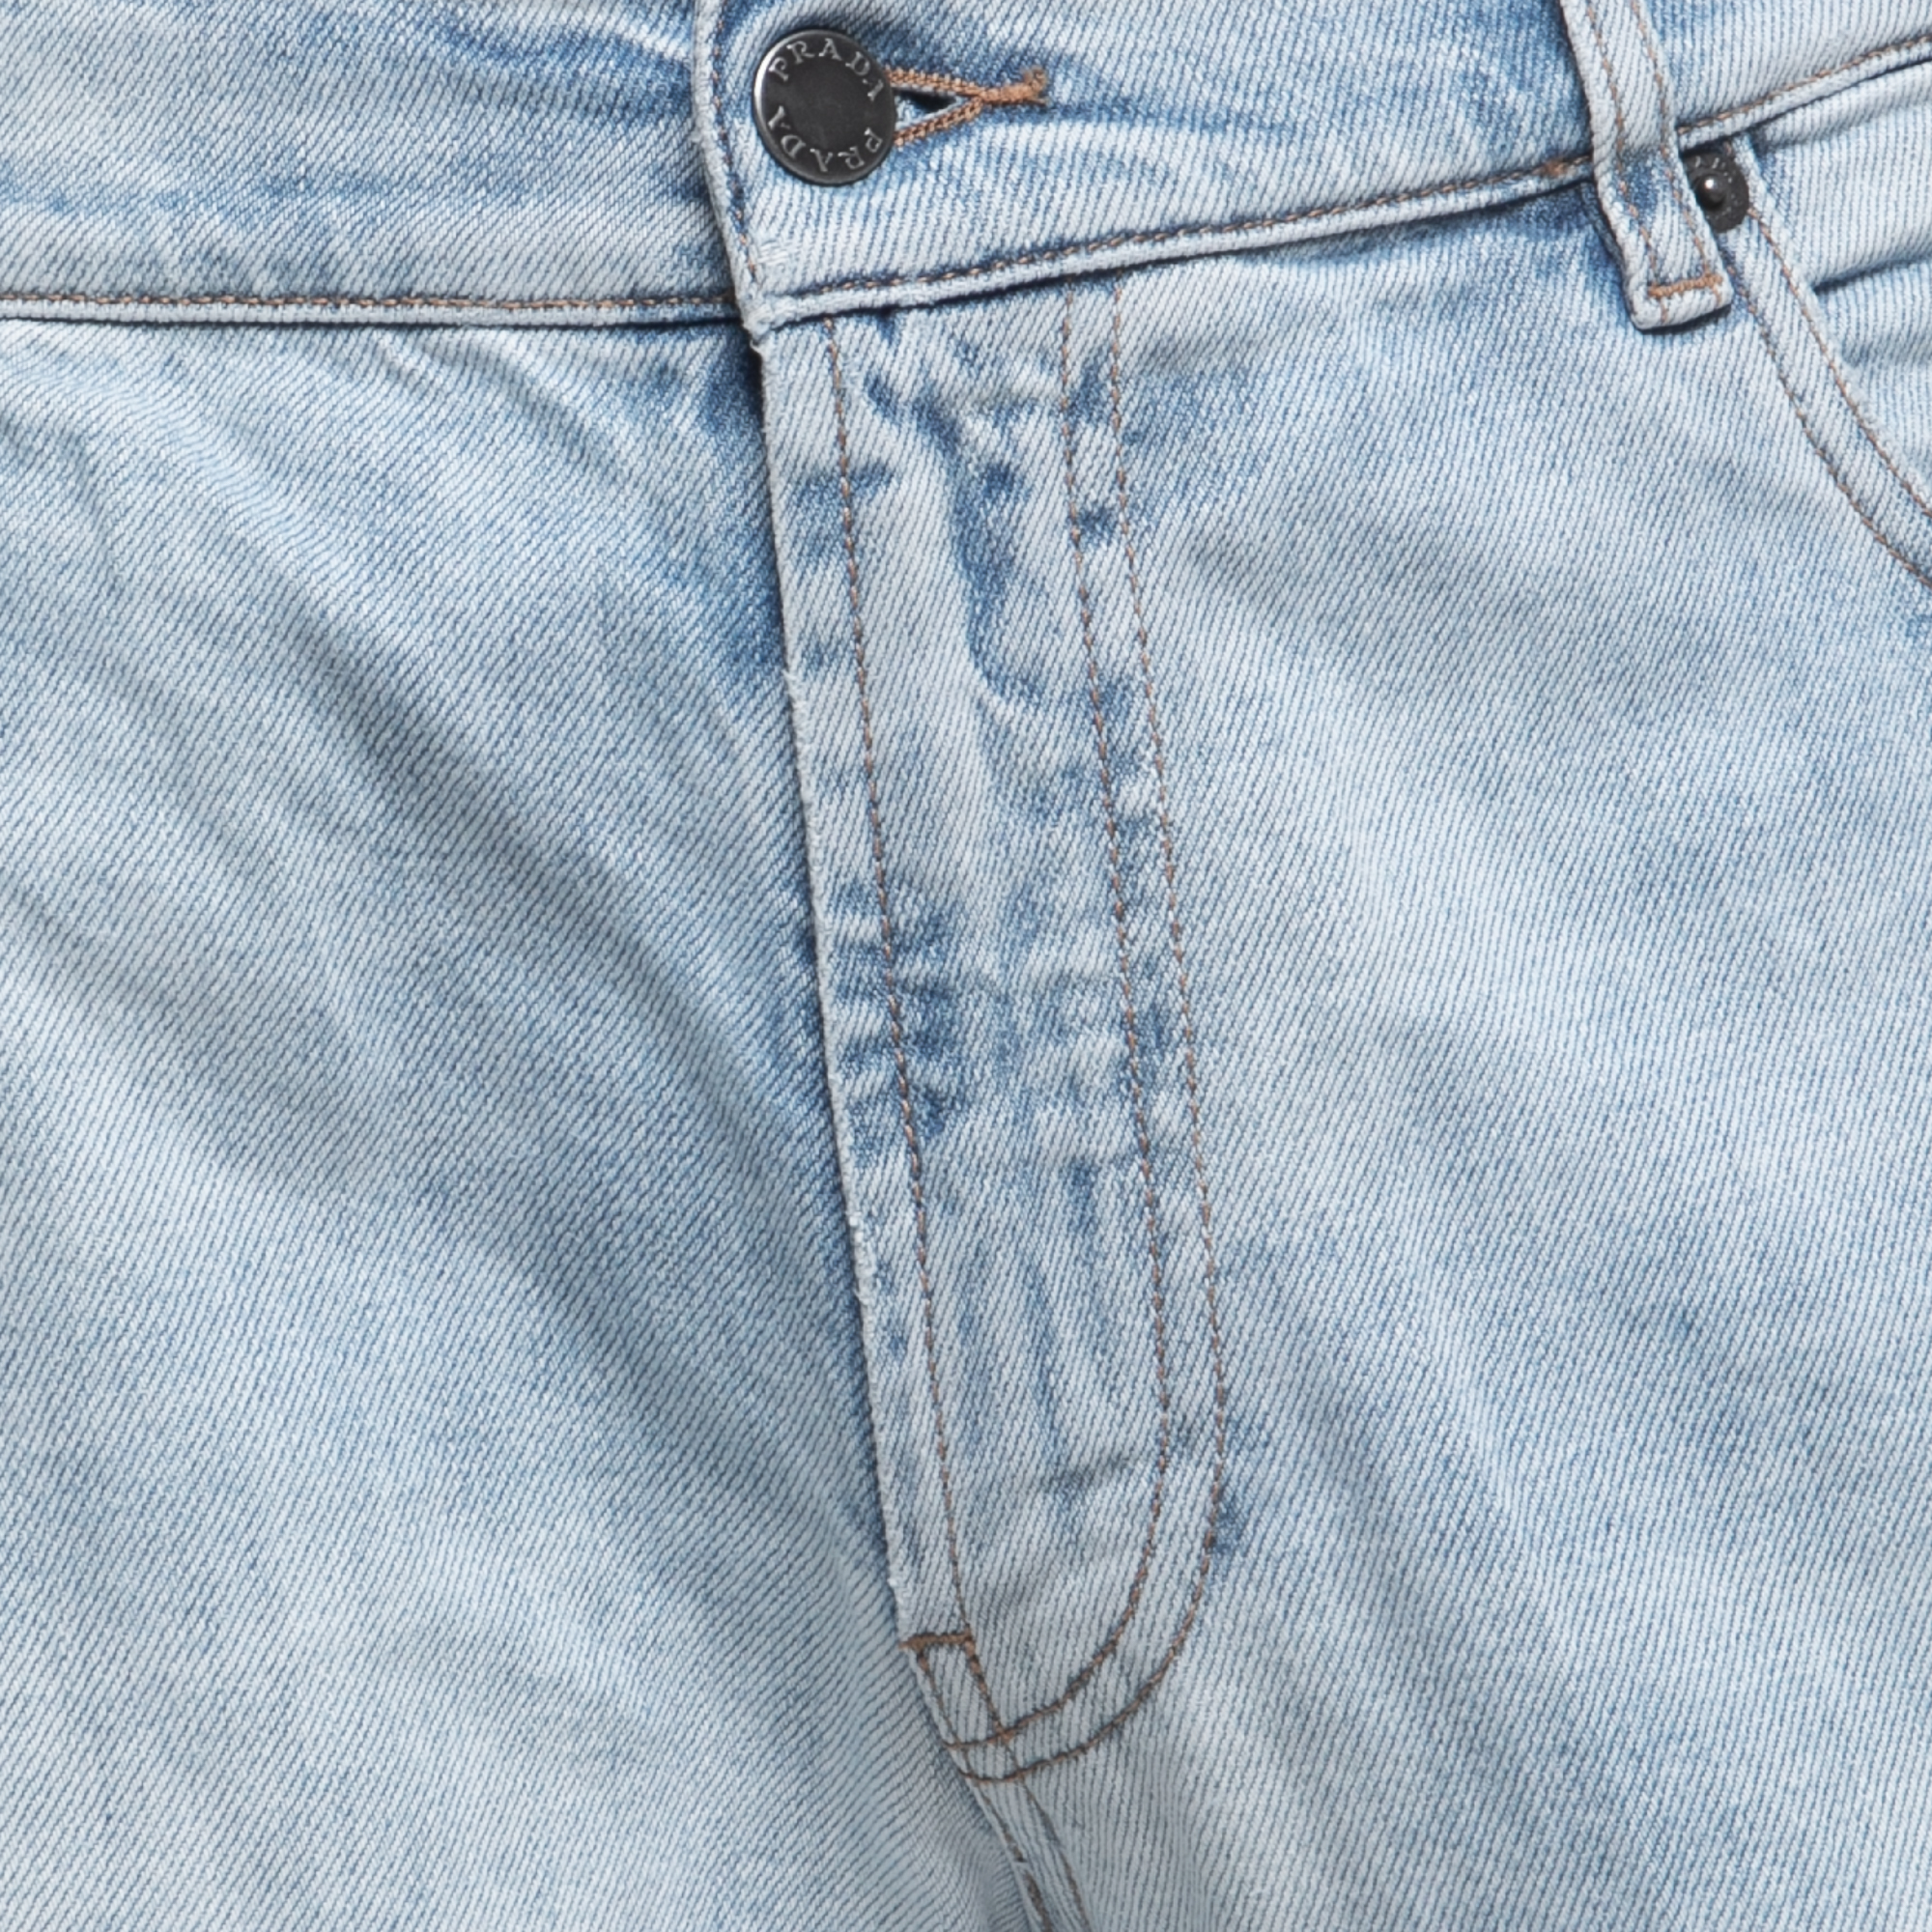 Prada Blue Washed & Ripped Denim Tight Fit Jeans M Waist 30